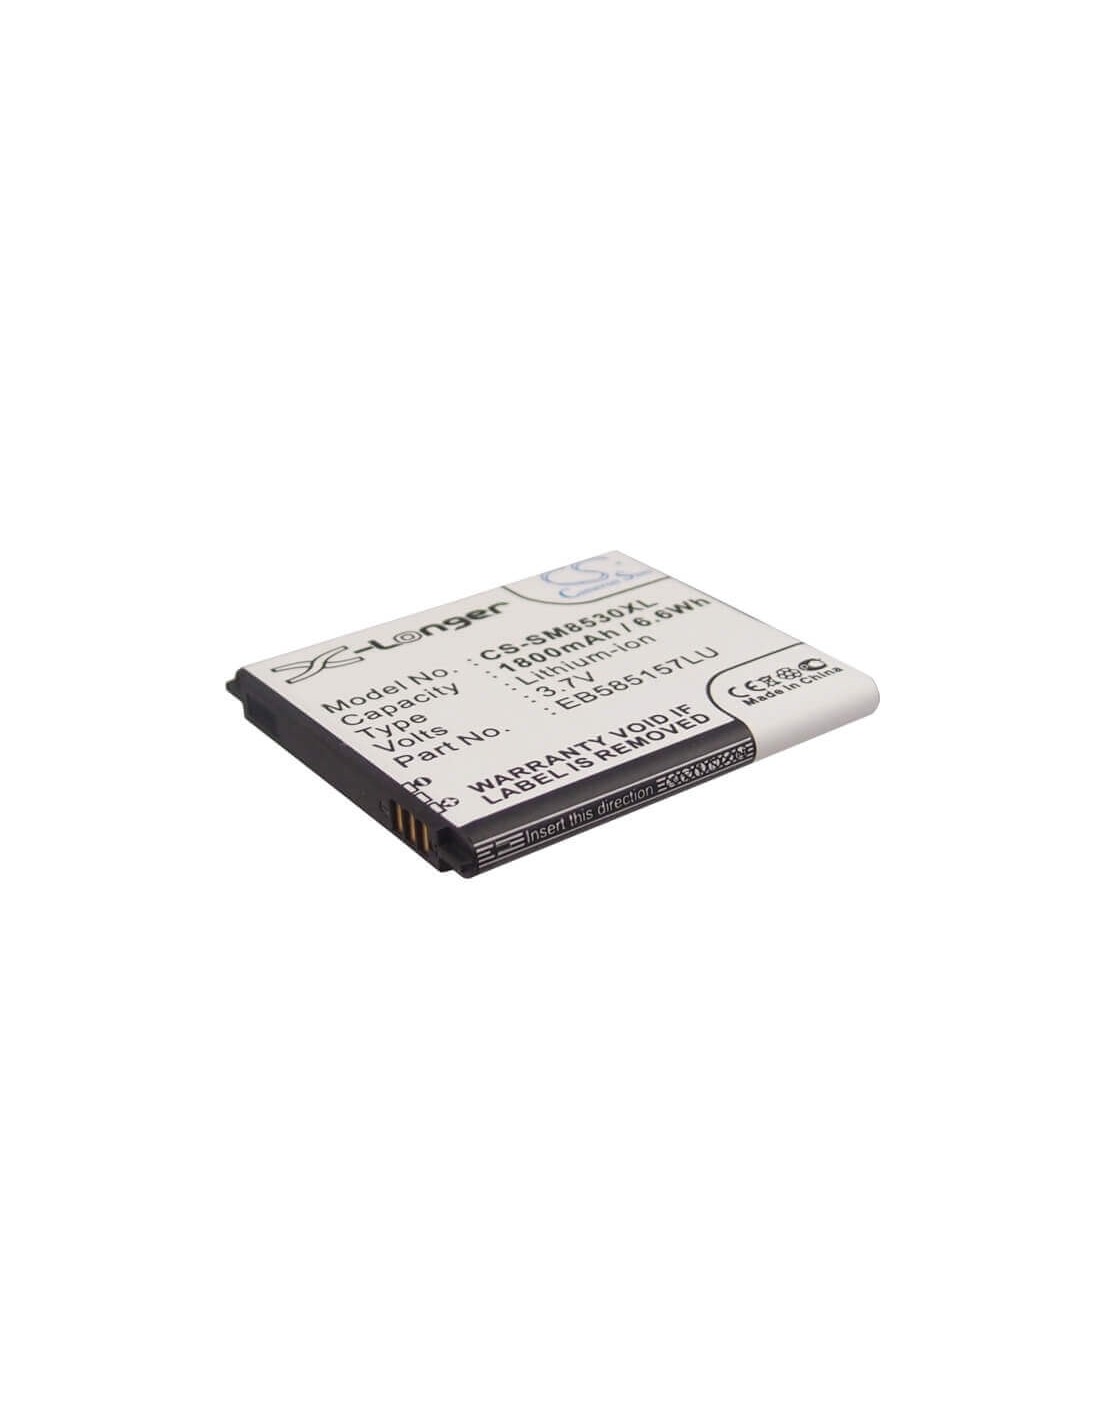 Battery for Samsung Galaxy Beam, GT-I8530, GT-I8550 3.7V, 1800mAh - 6.66Wh